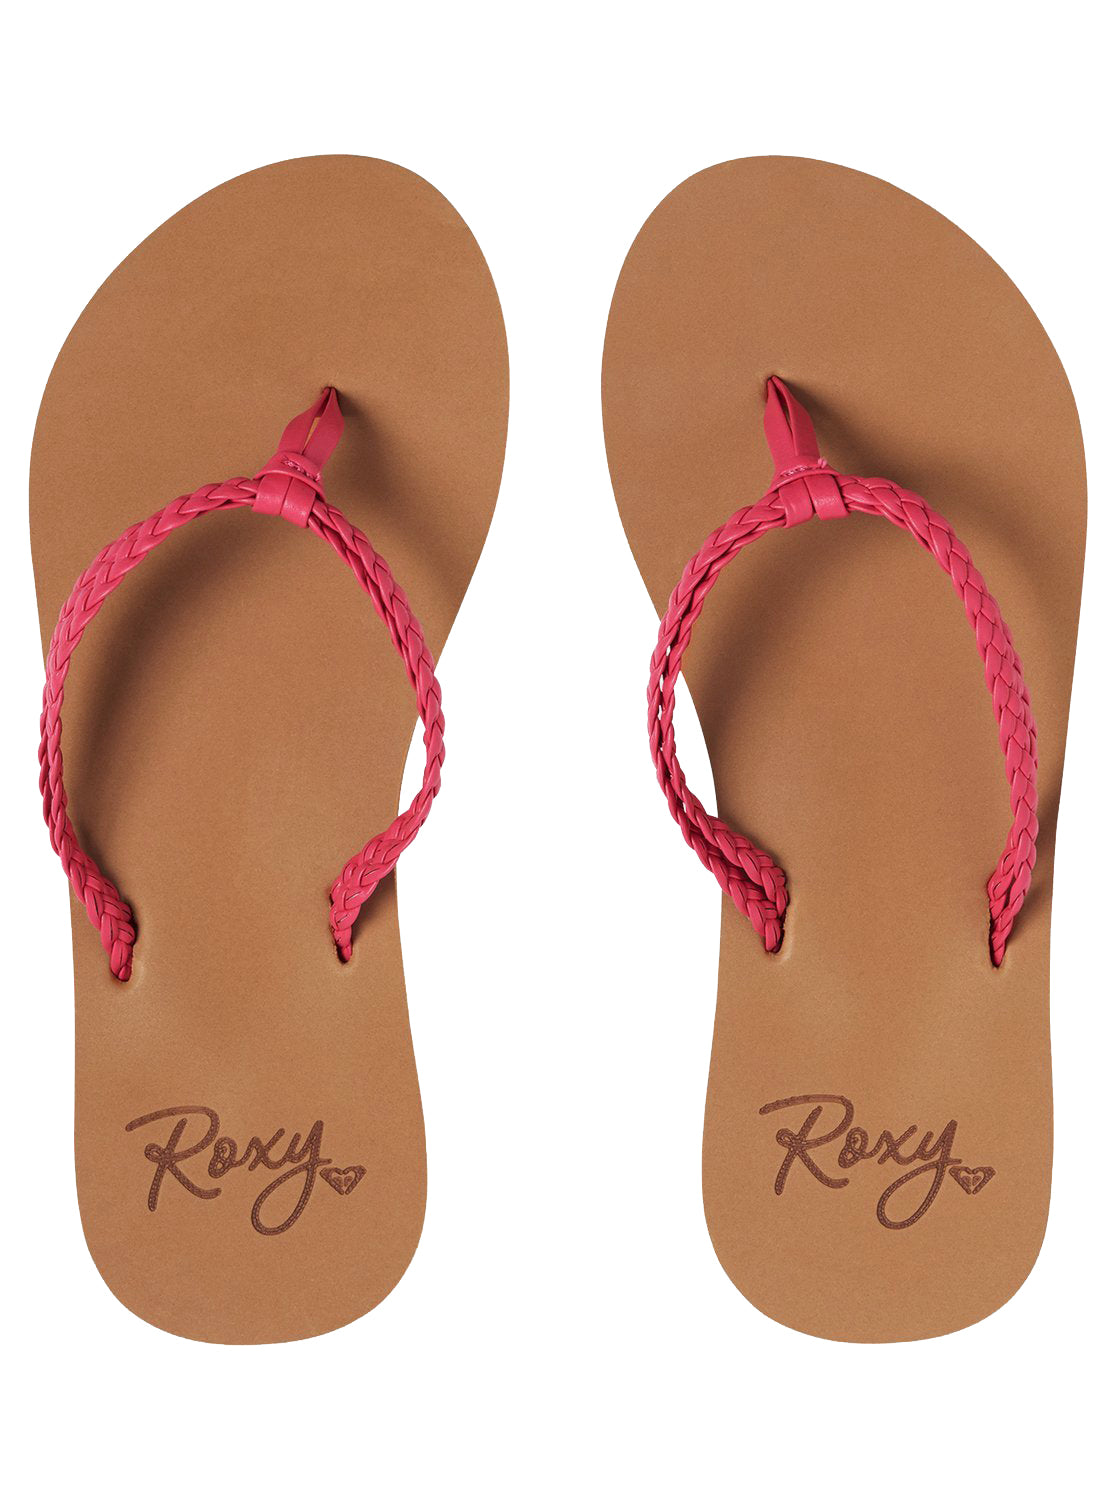 Roxy Costas Girls Sandals RAS-Raspberry 13 C